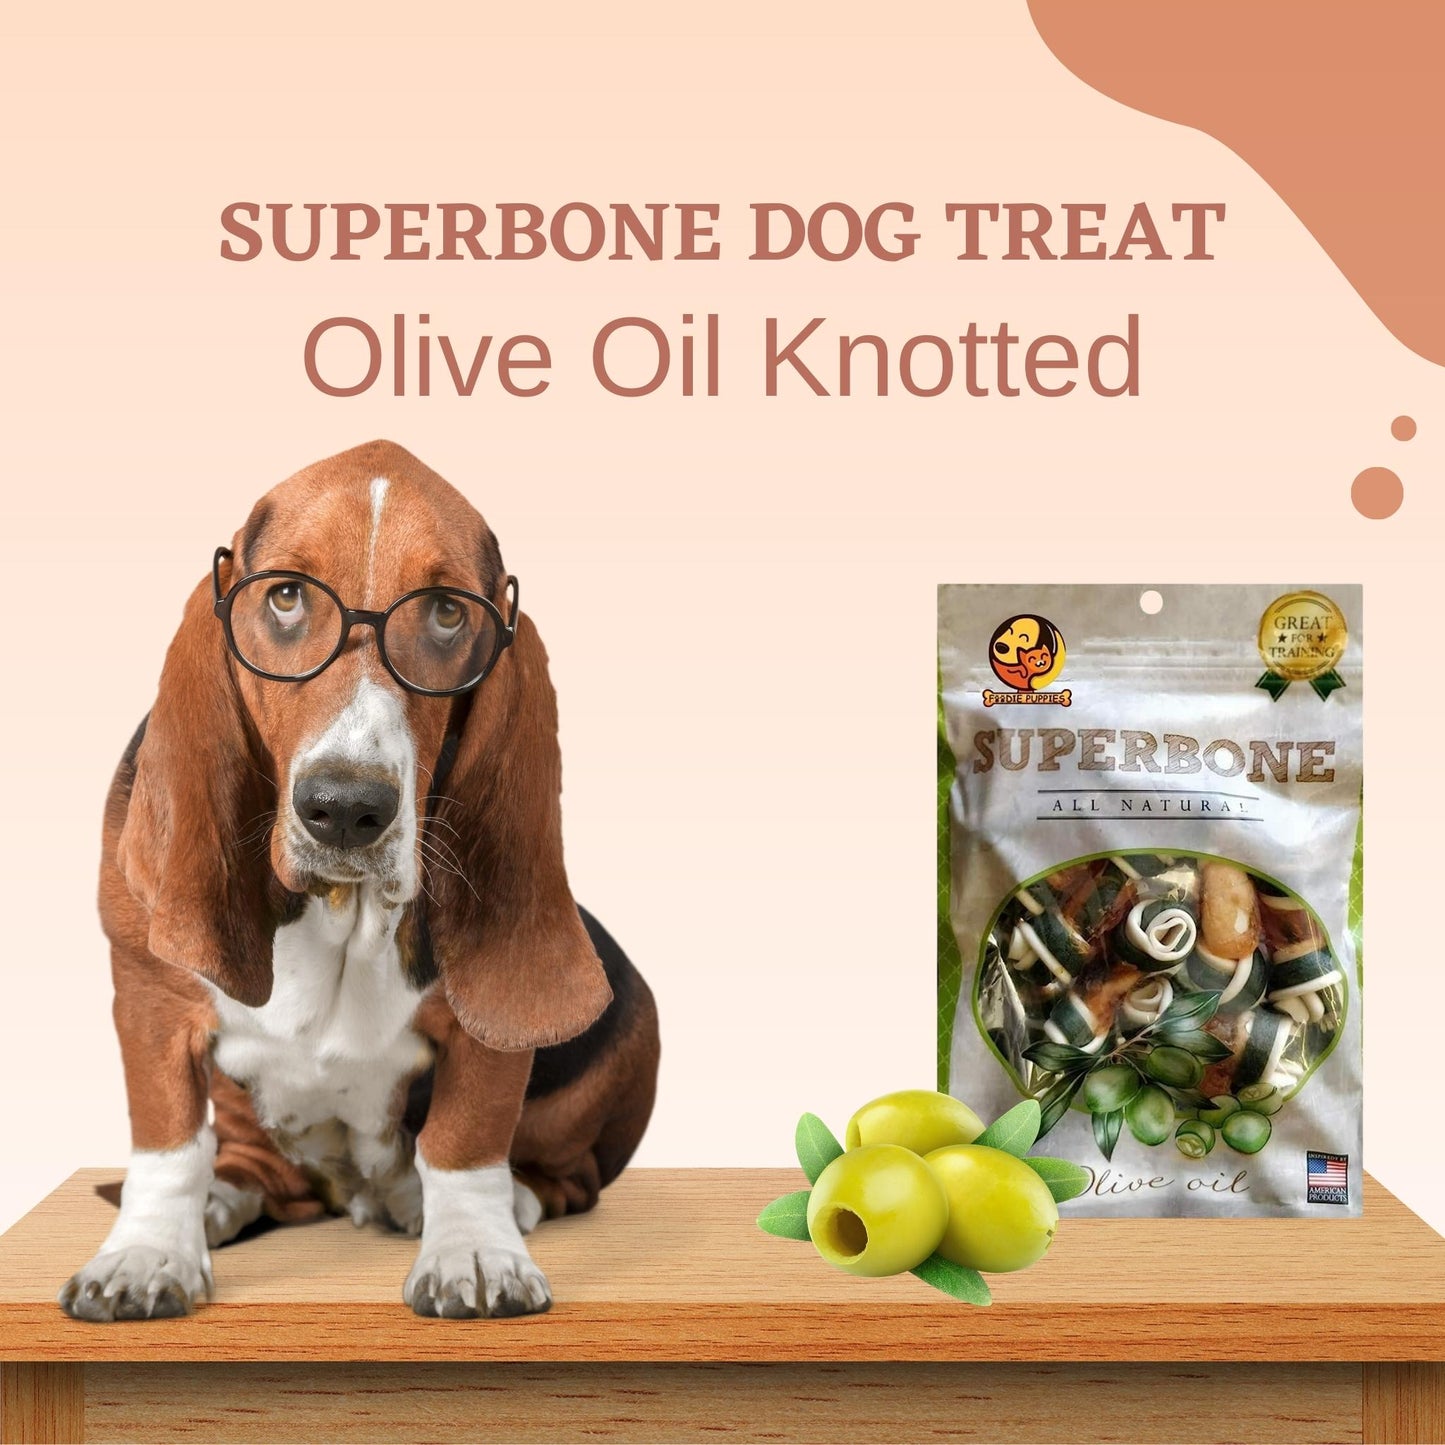 SuperBone All Natural Olive Oil Knotted Dog Treat - Pack of 1